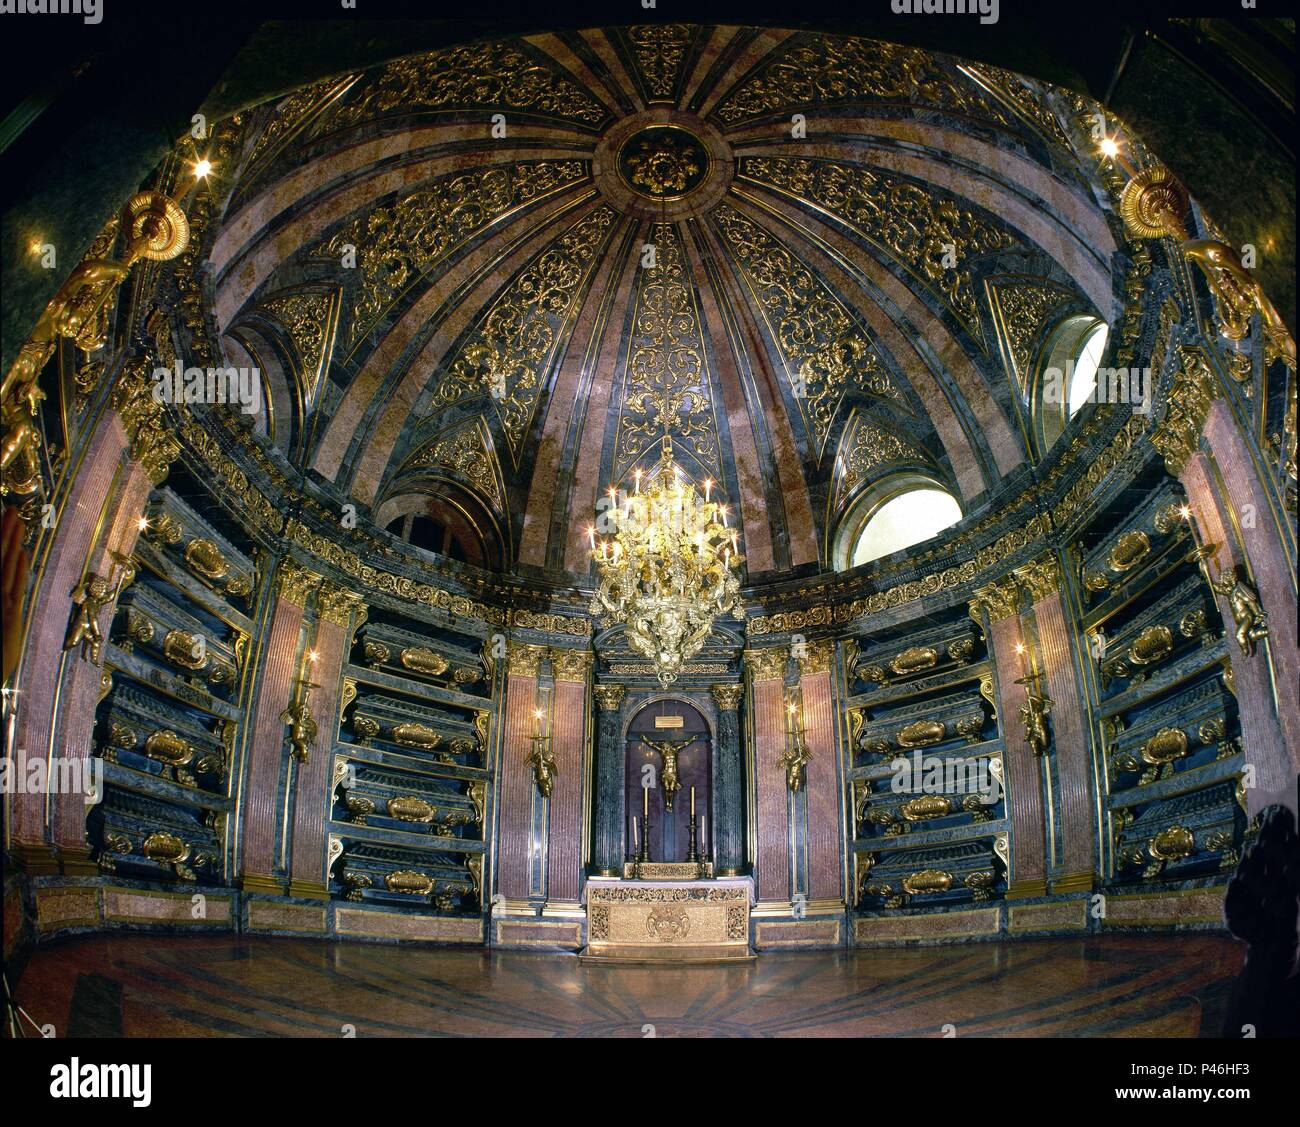 Royal pantheon escorial spain hi-res stock photography and images - Alamy